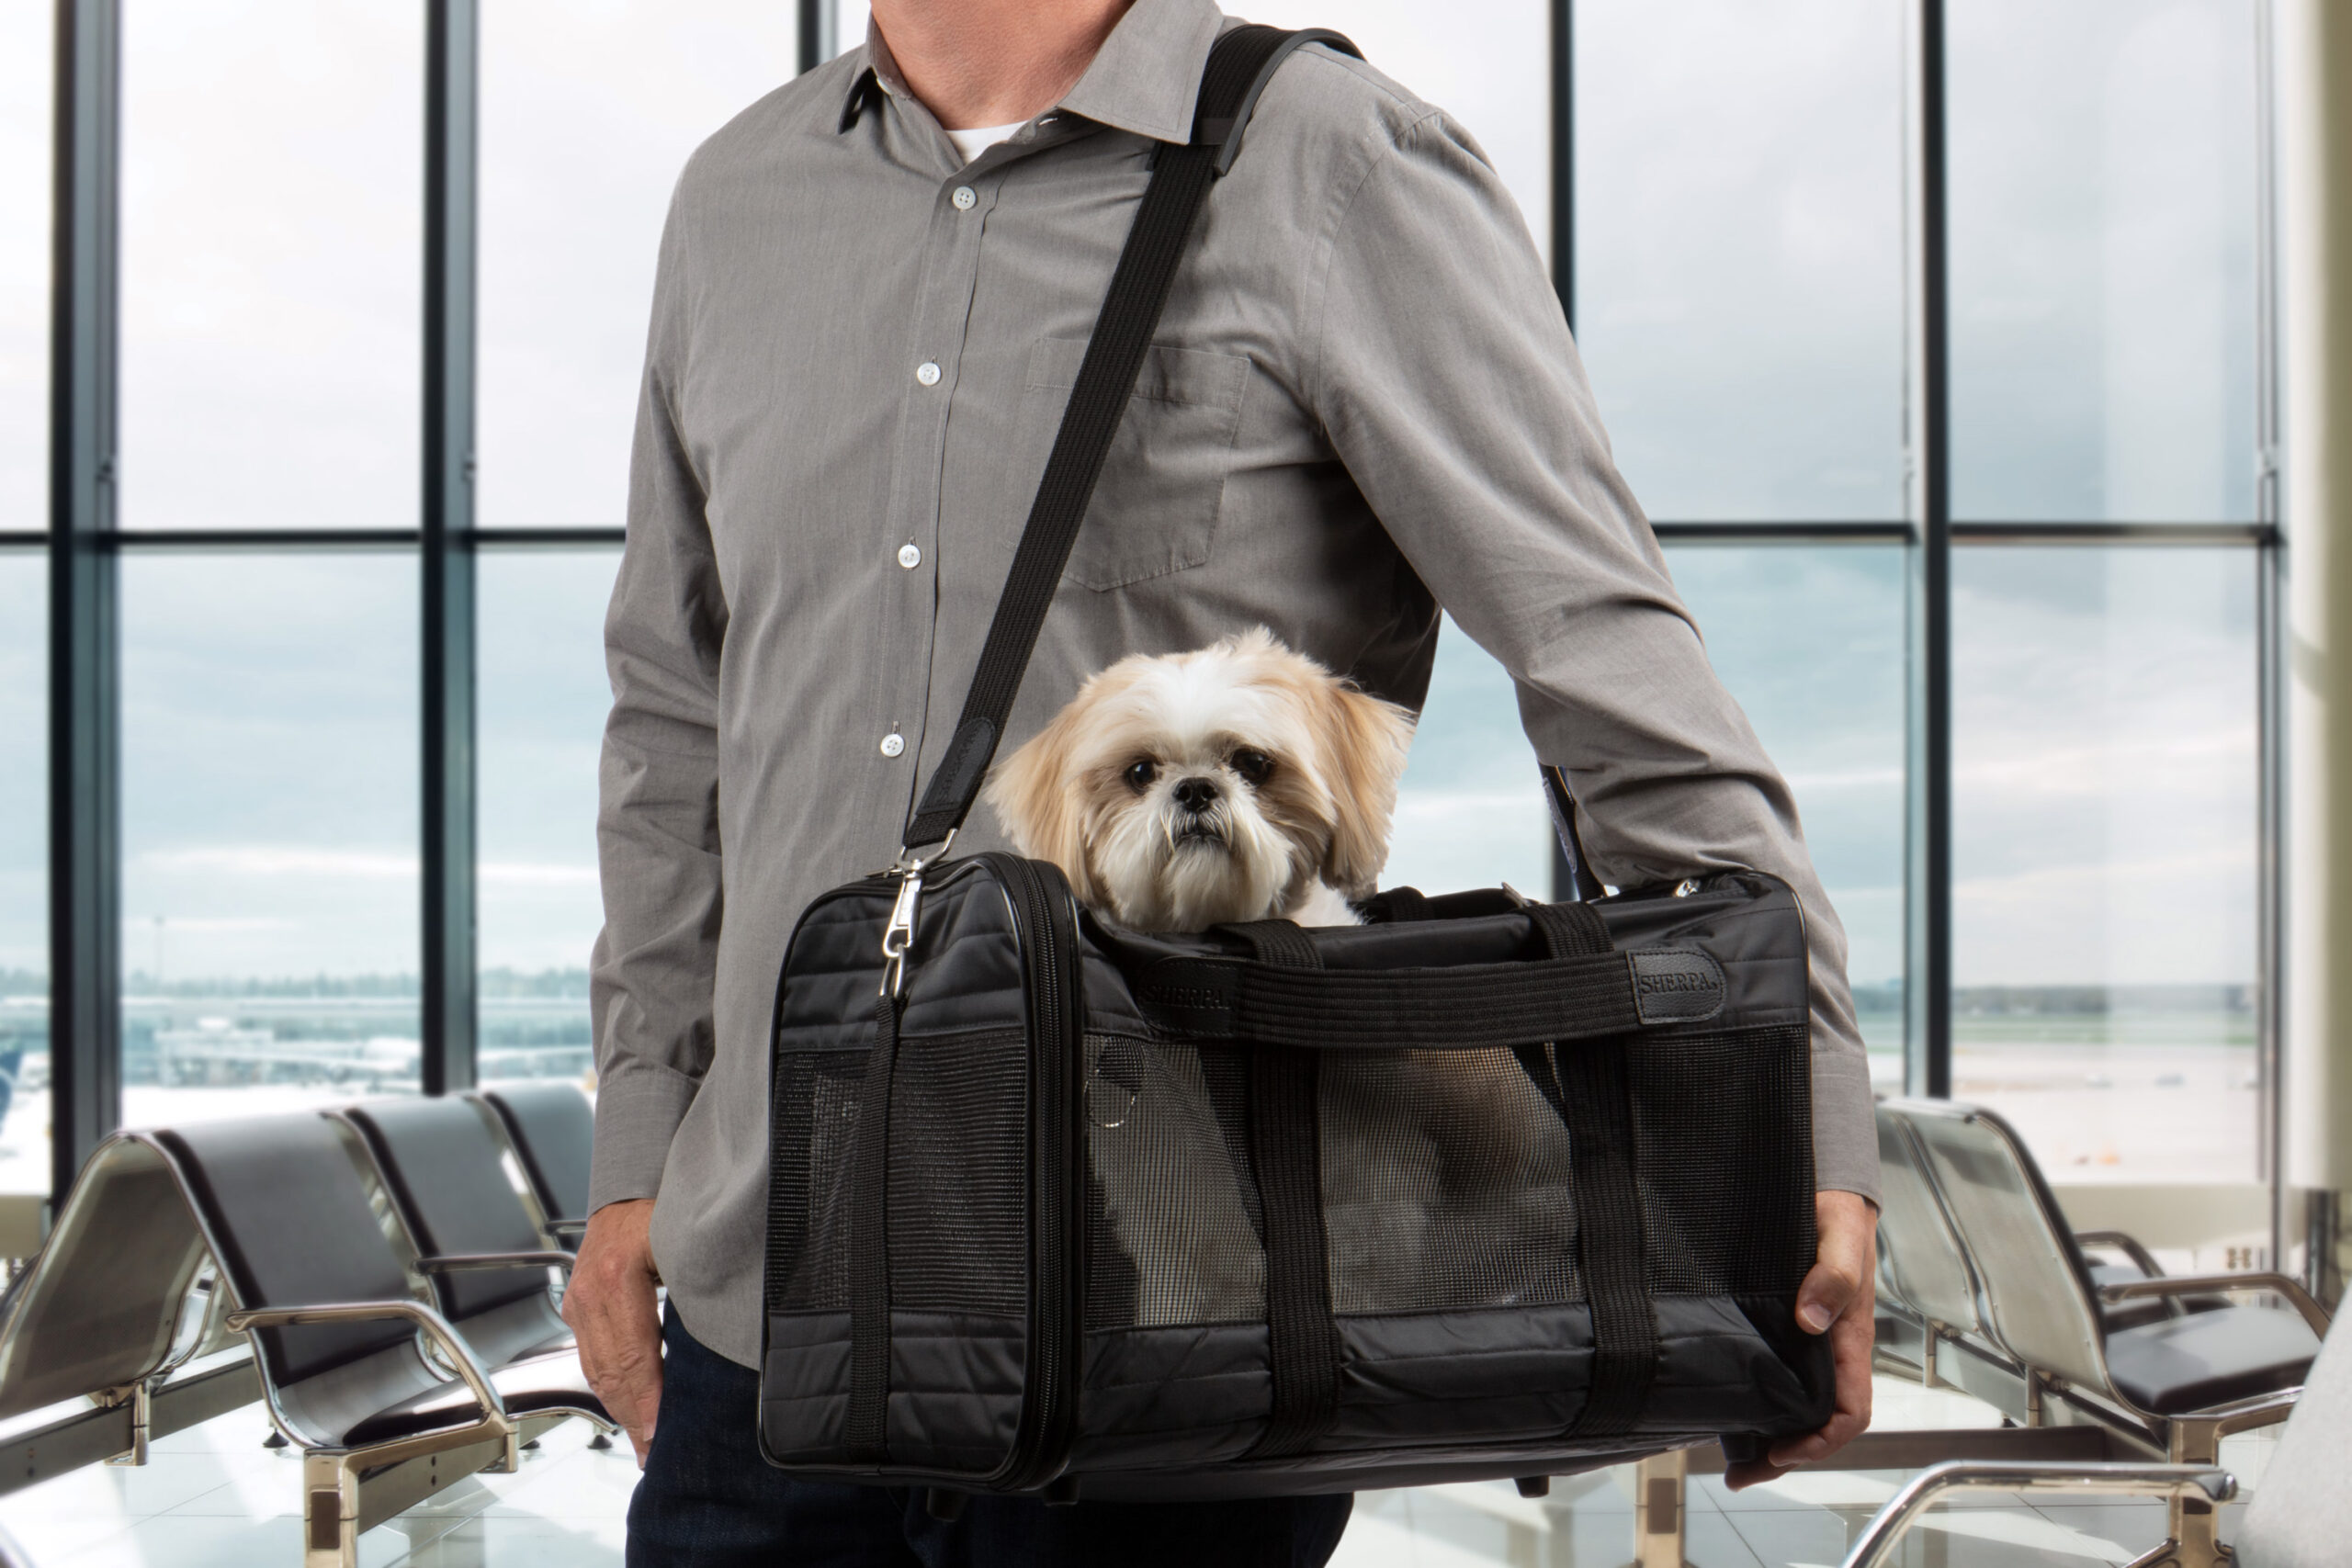 The Best Cat Carrier: Sherpa Original Deluxe Pet Carrier Bag